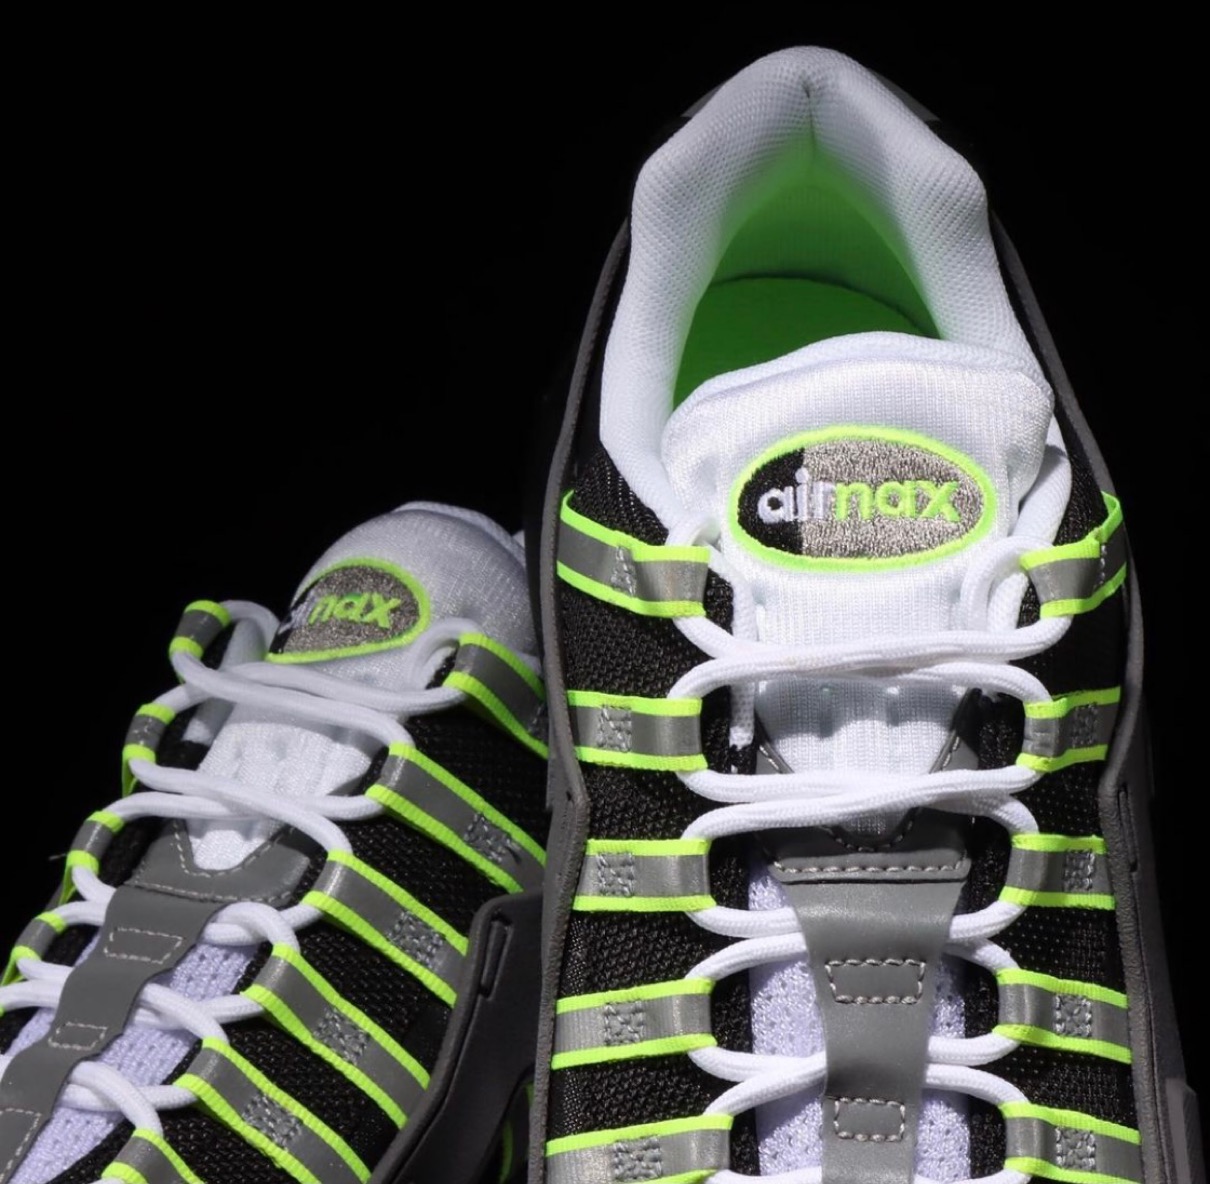 Nike Air Max 95 Ndstrkt Neon が国内12月7日に発売予定 Up To Date